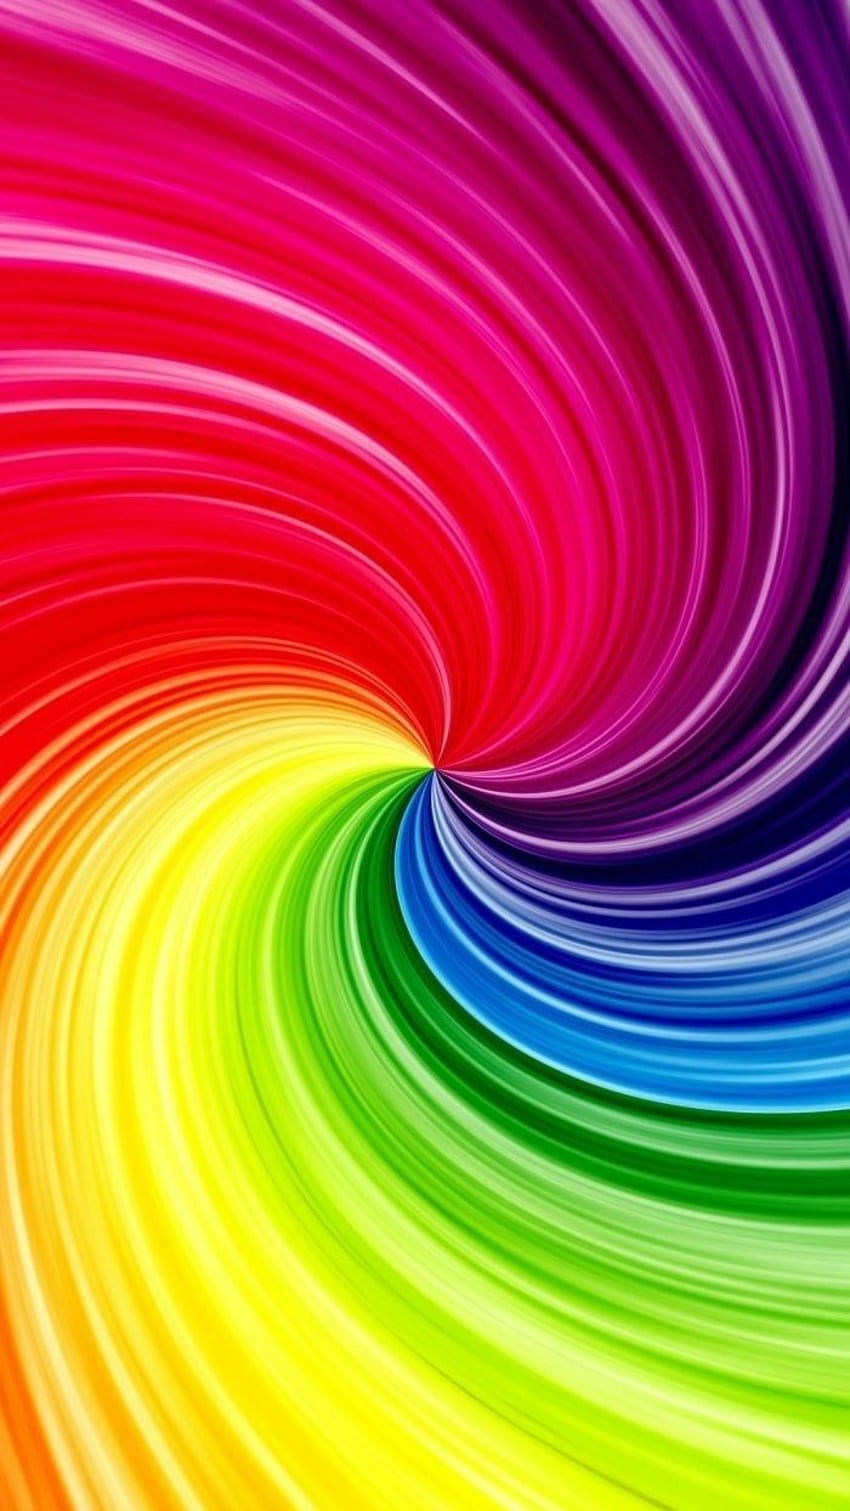 Remolino de color del arco iris 3D. Hipster de iPhone, iPhone en vivo, Android, Arcoíris 3D fondo de pantalla del teléfono